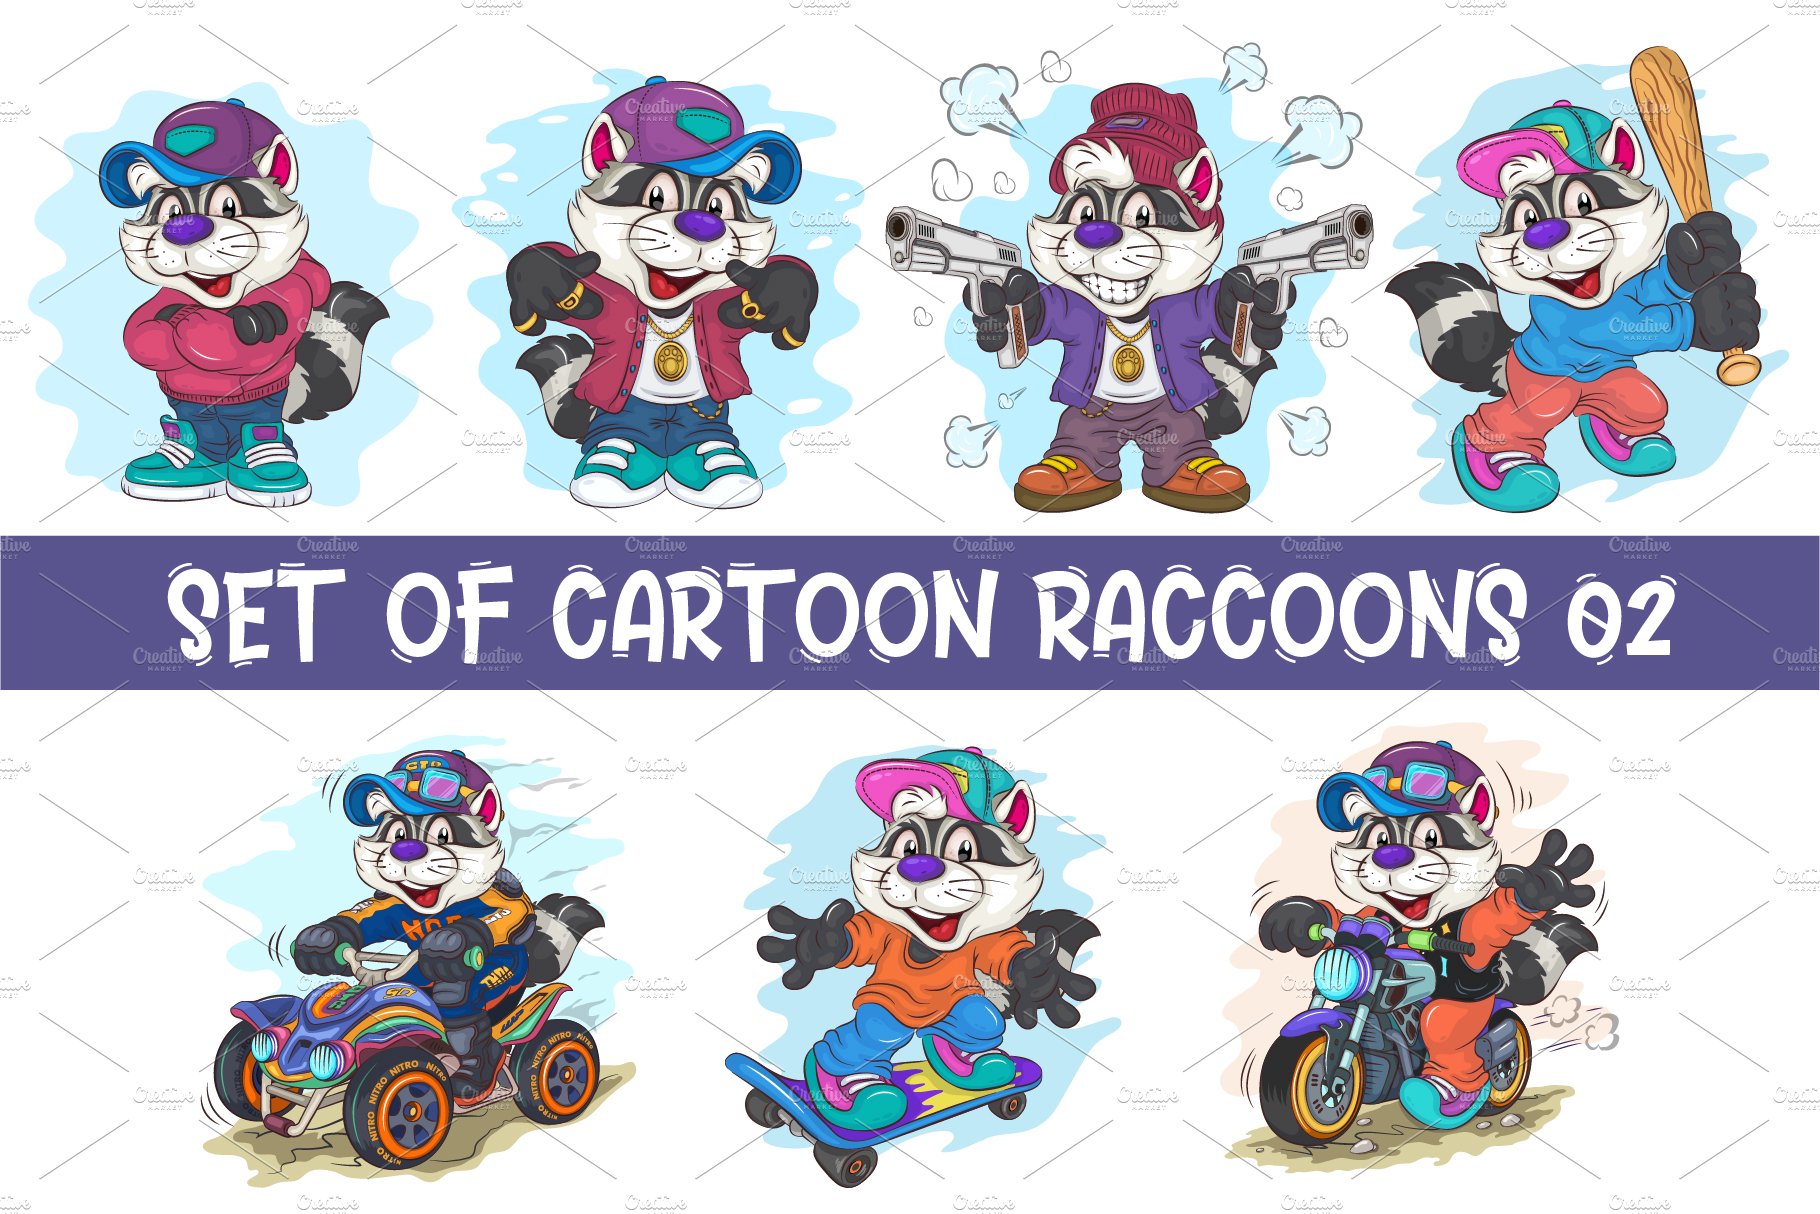 Set of Cartoon Raccoons 02. T-Shirt. cover image.